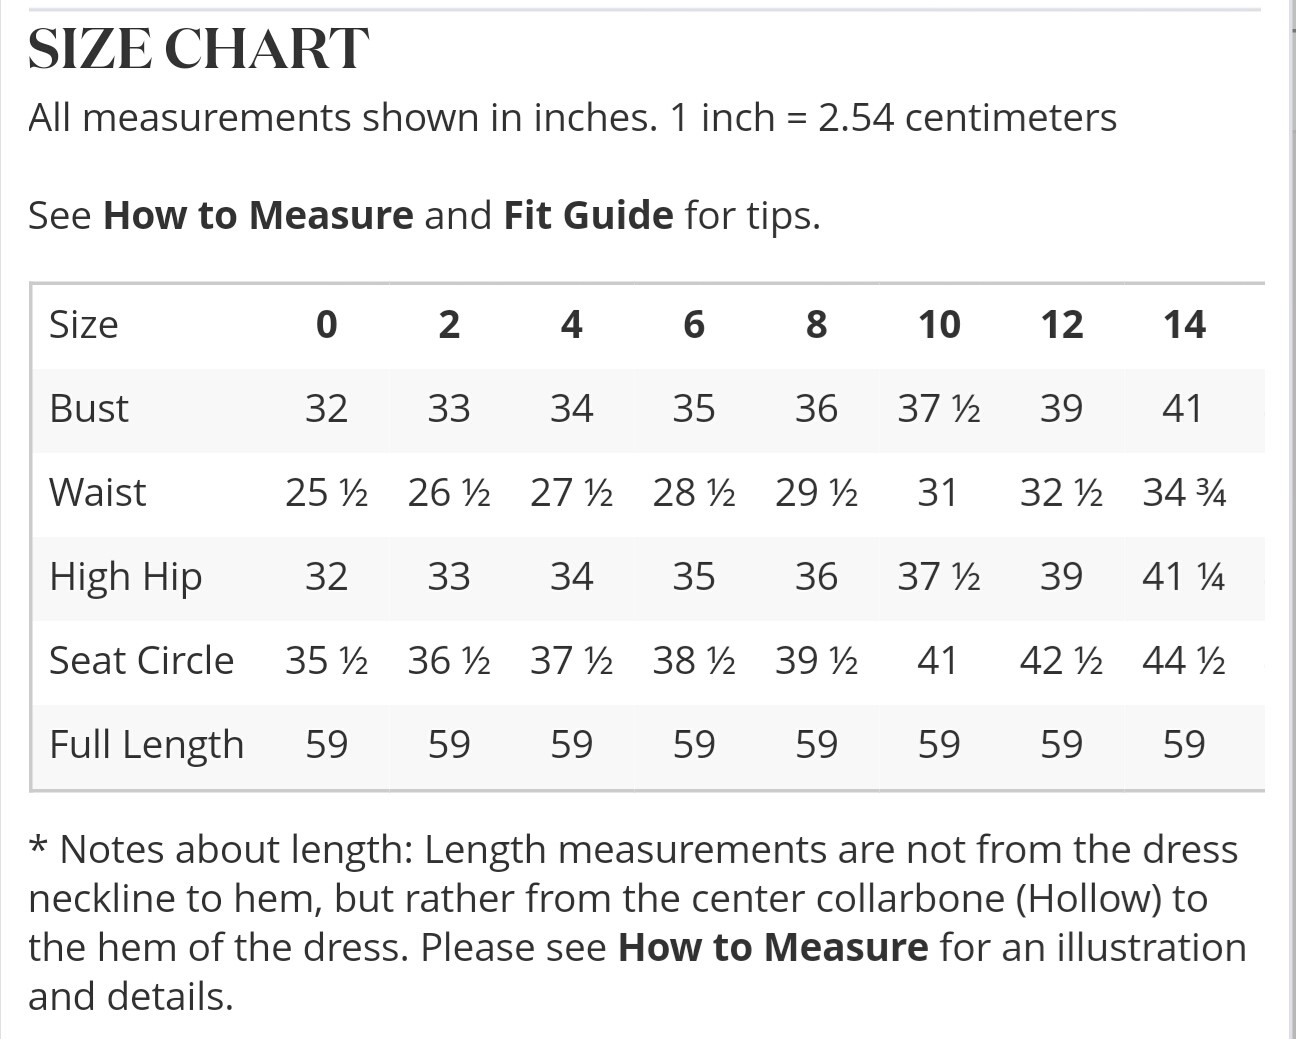 David S Bridal Dress Size Chart